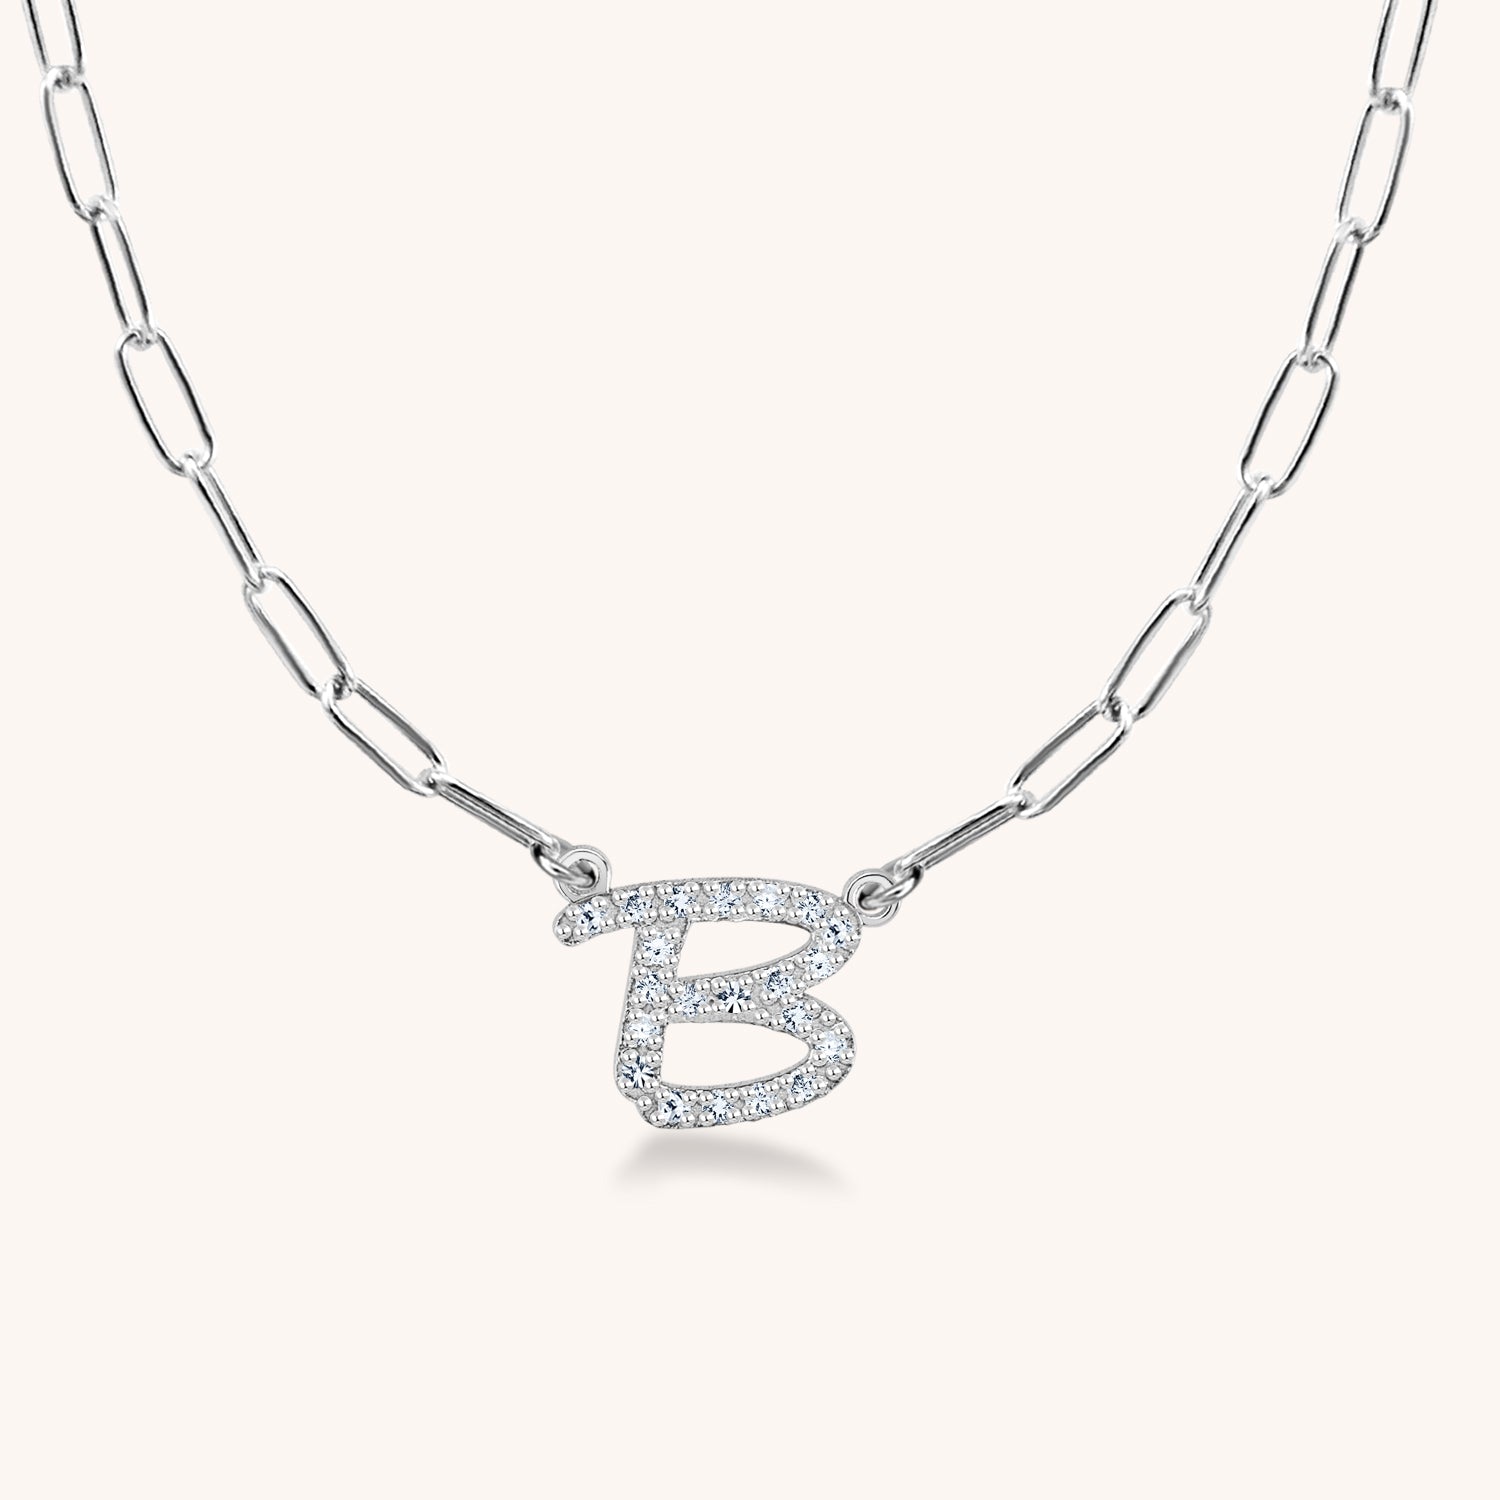 Crystal Necklaces for sale in Westside Terrace | Facebook Marketplace |  Facebook